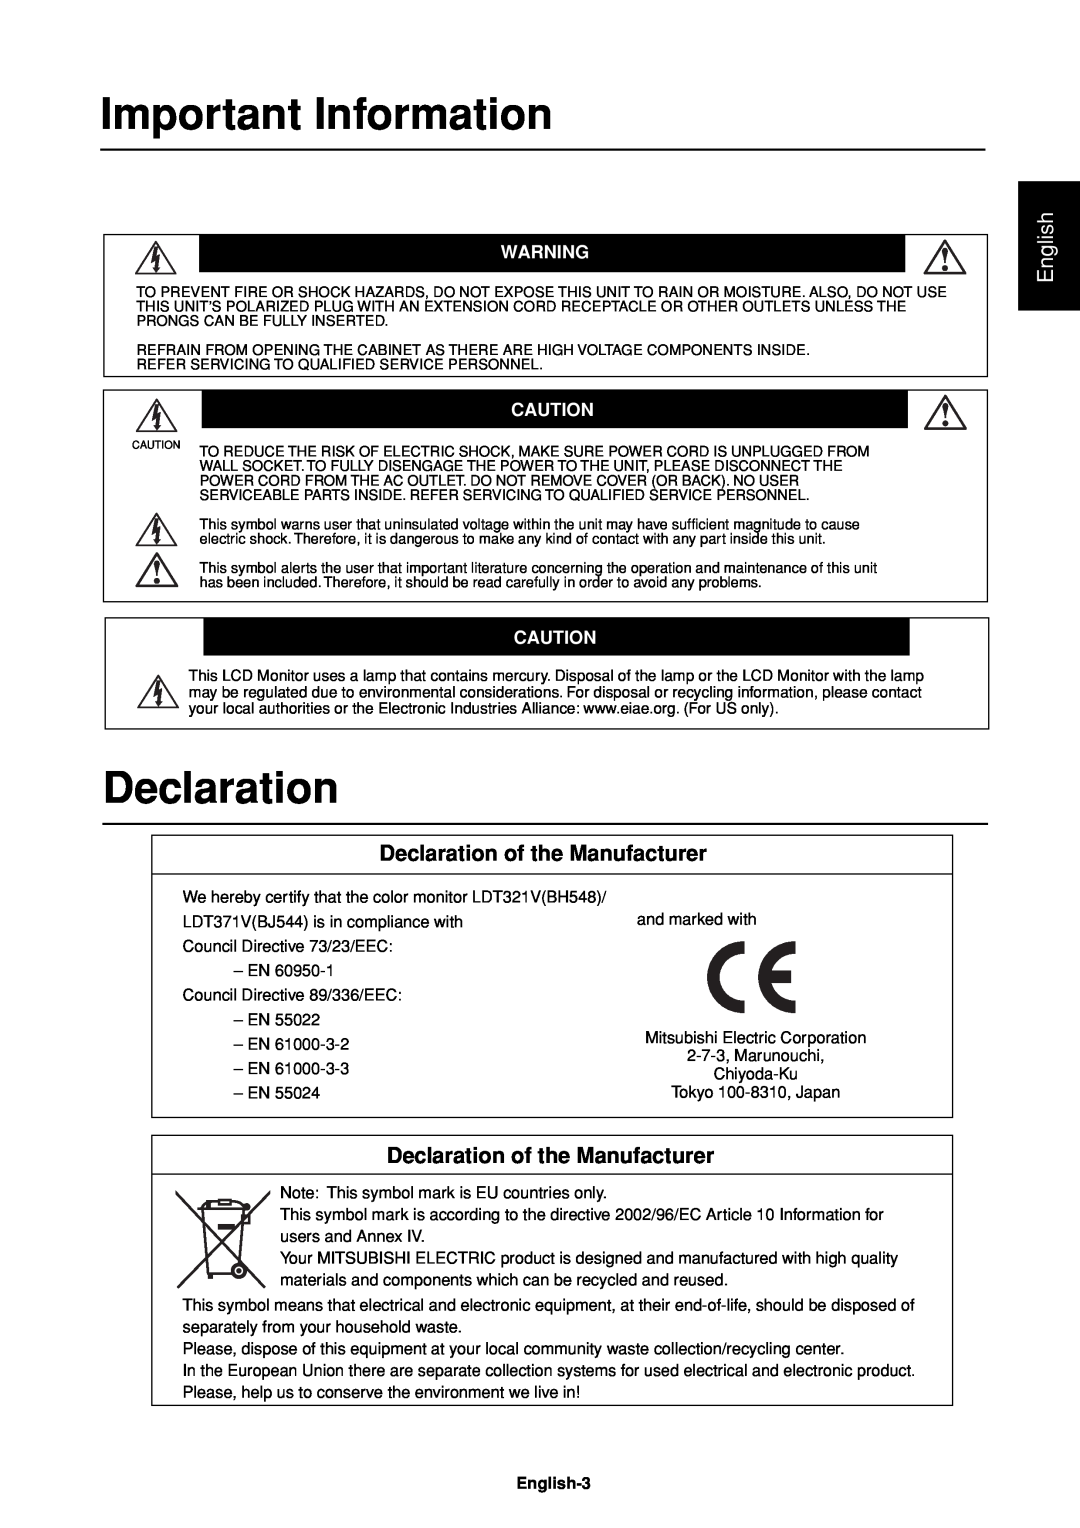 Mitsubishi Electronics LDT37IV (BH544) manual Declaration of the Manufacturer, Important Information, English 